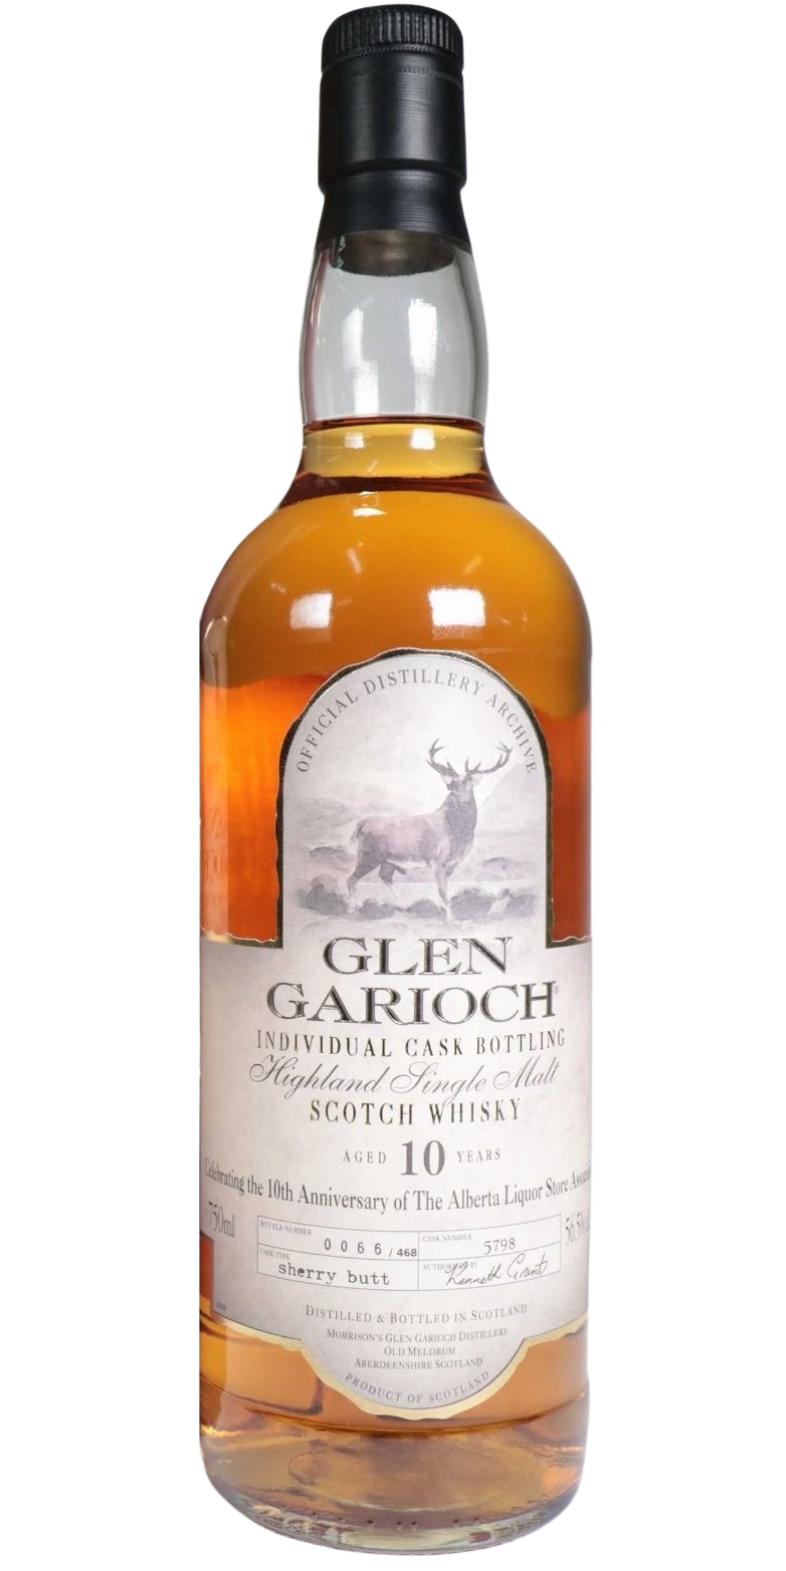 Glen Garioch 10yo Individual Cask Bottling Sherry Butt 5798 The Alberta Liquor Store Association 10th Anniversary 56.5% 750ml